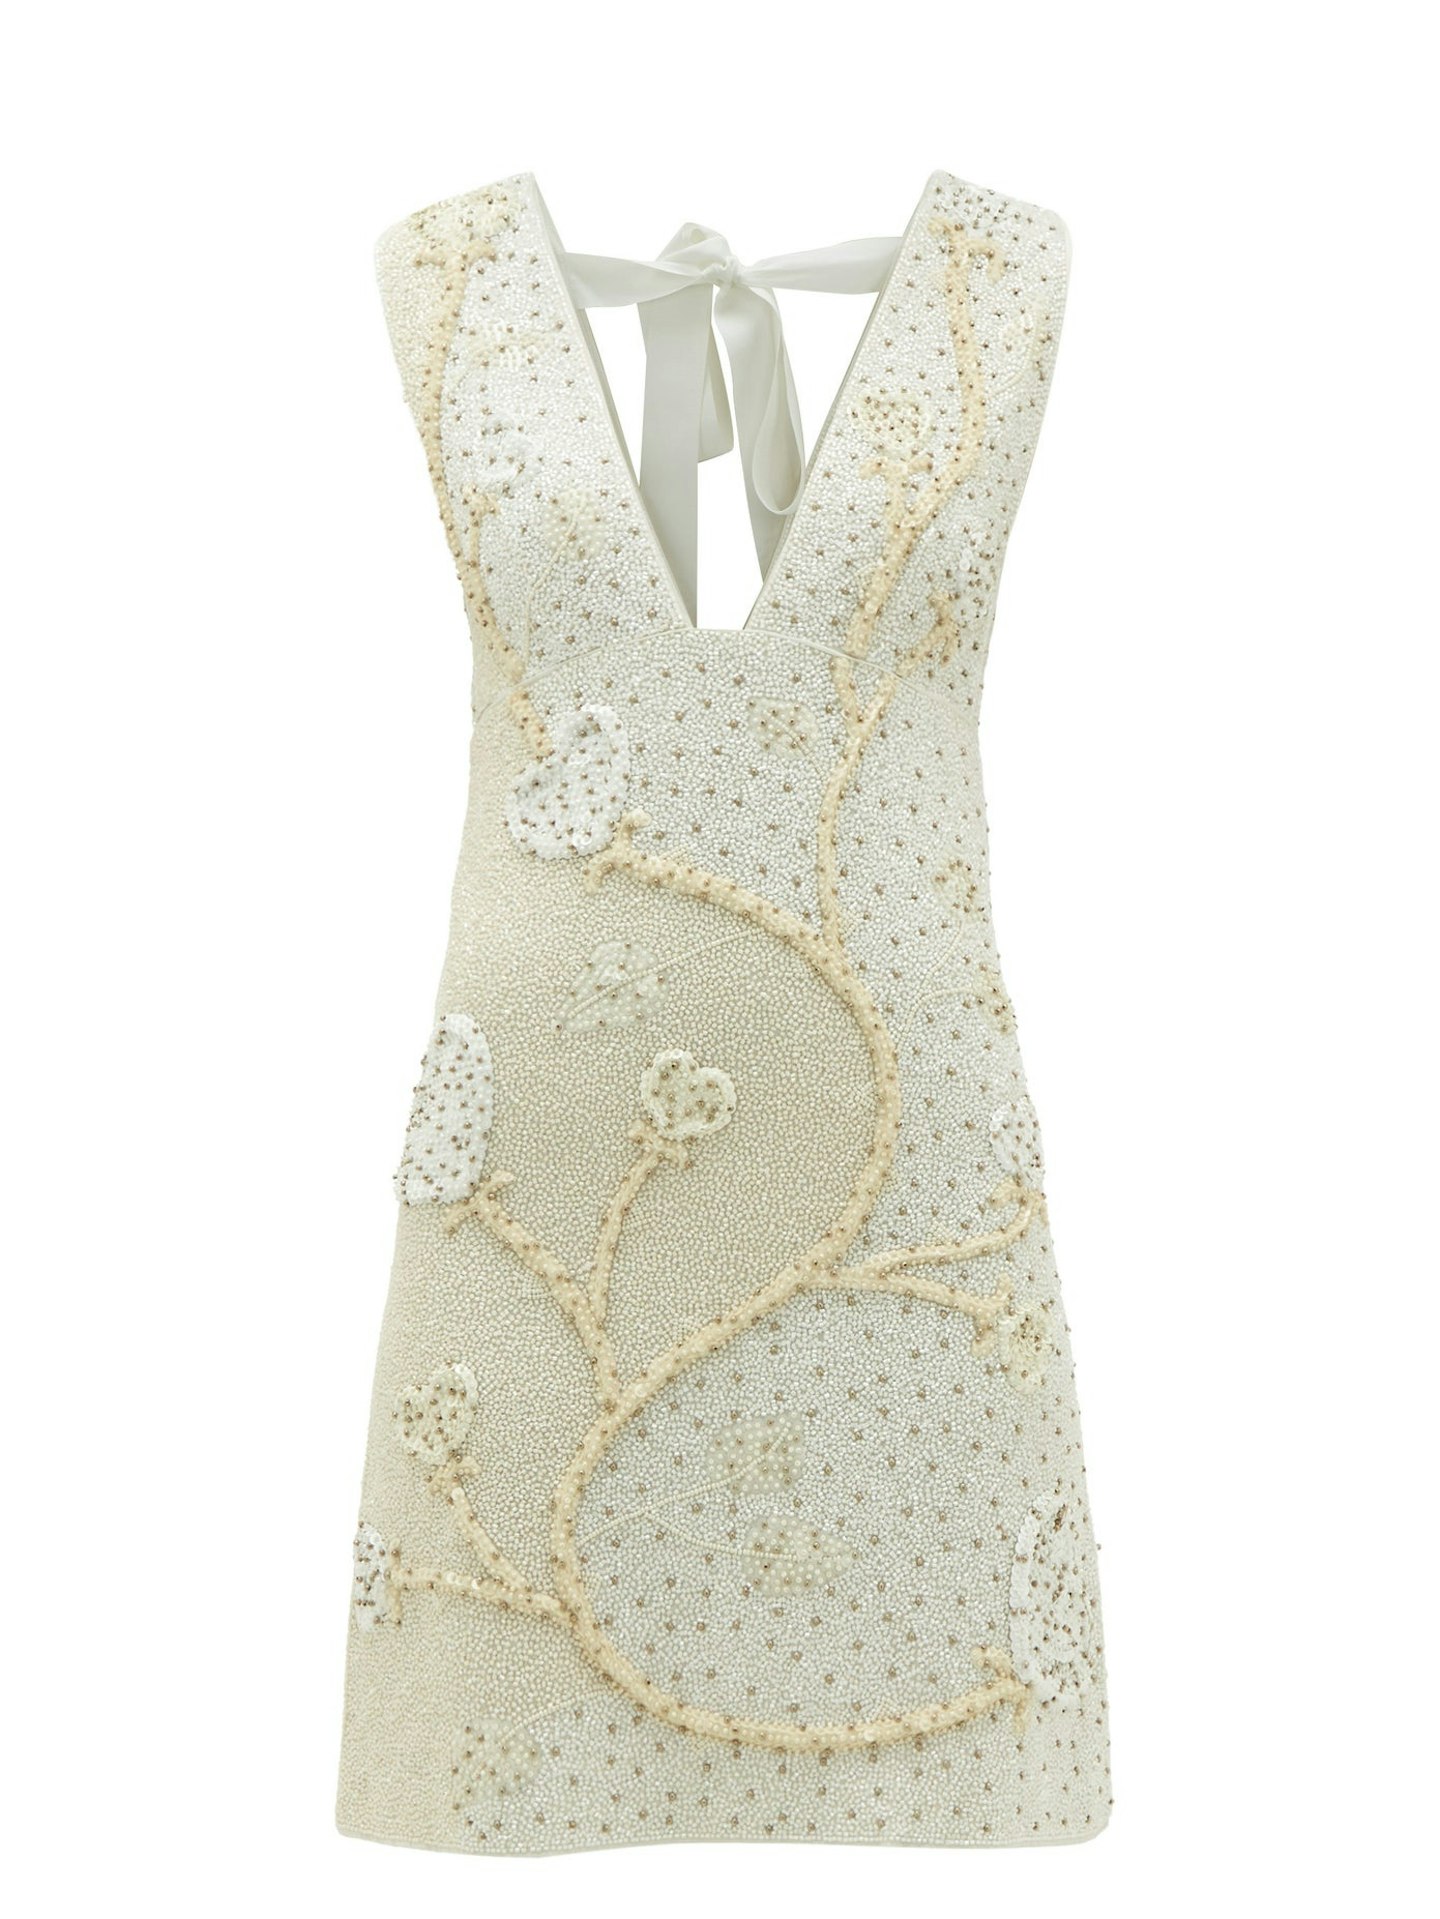 Ganni, Tie-Back Floral Crepe Beaded Mini Dress, £775 at Matchesfashion.com